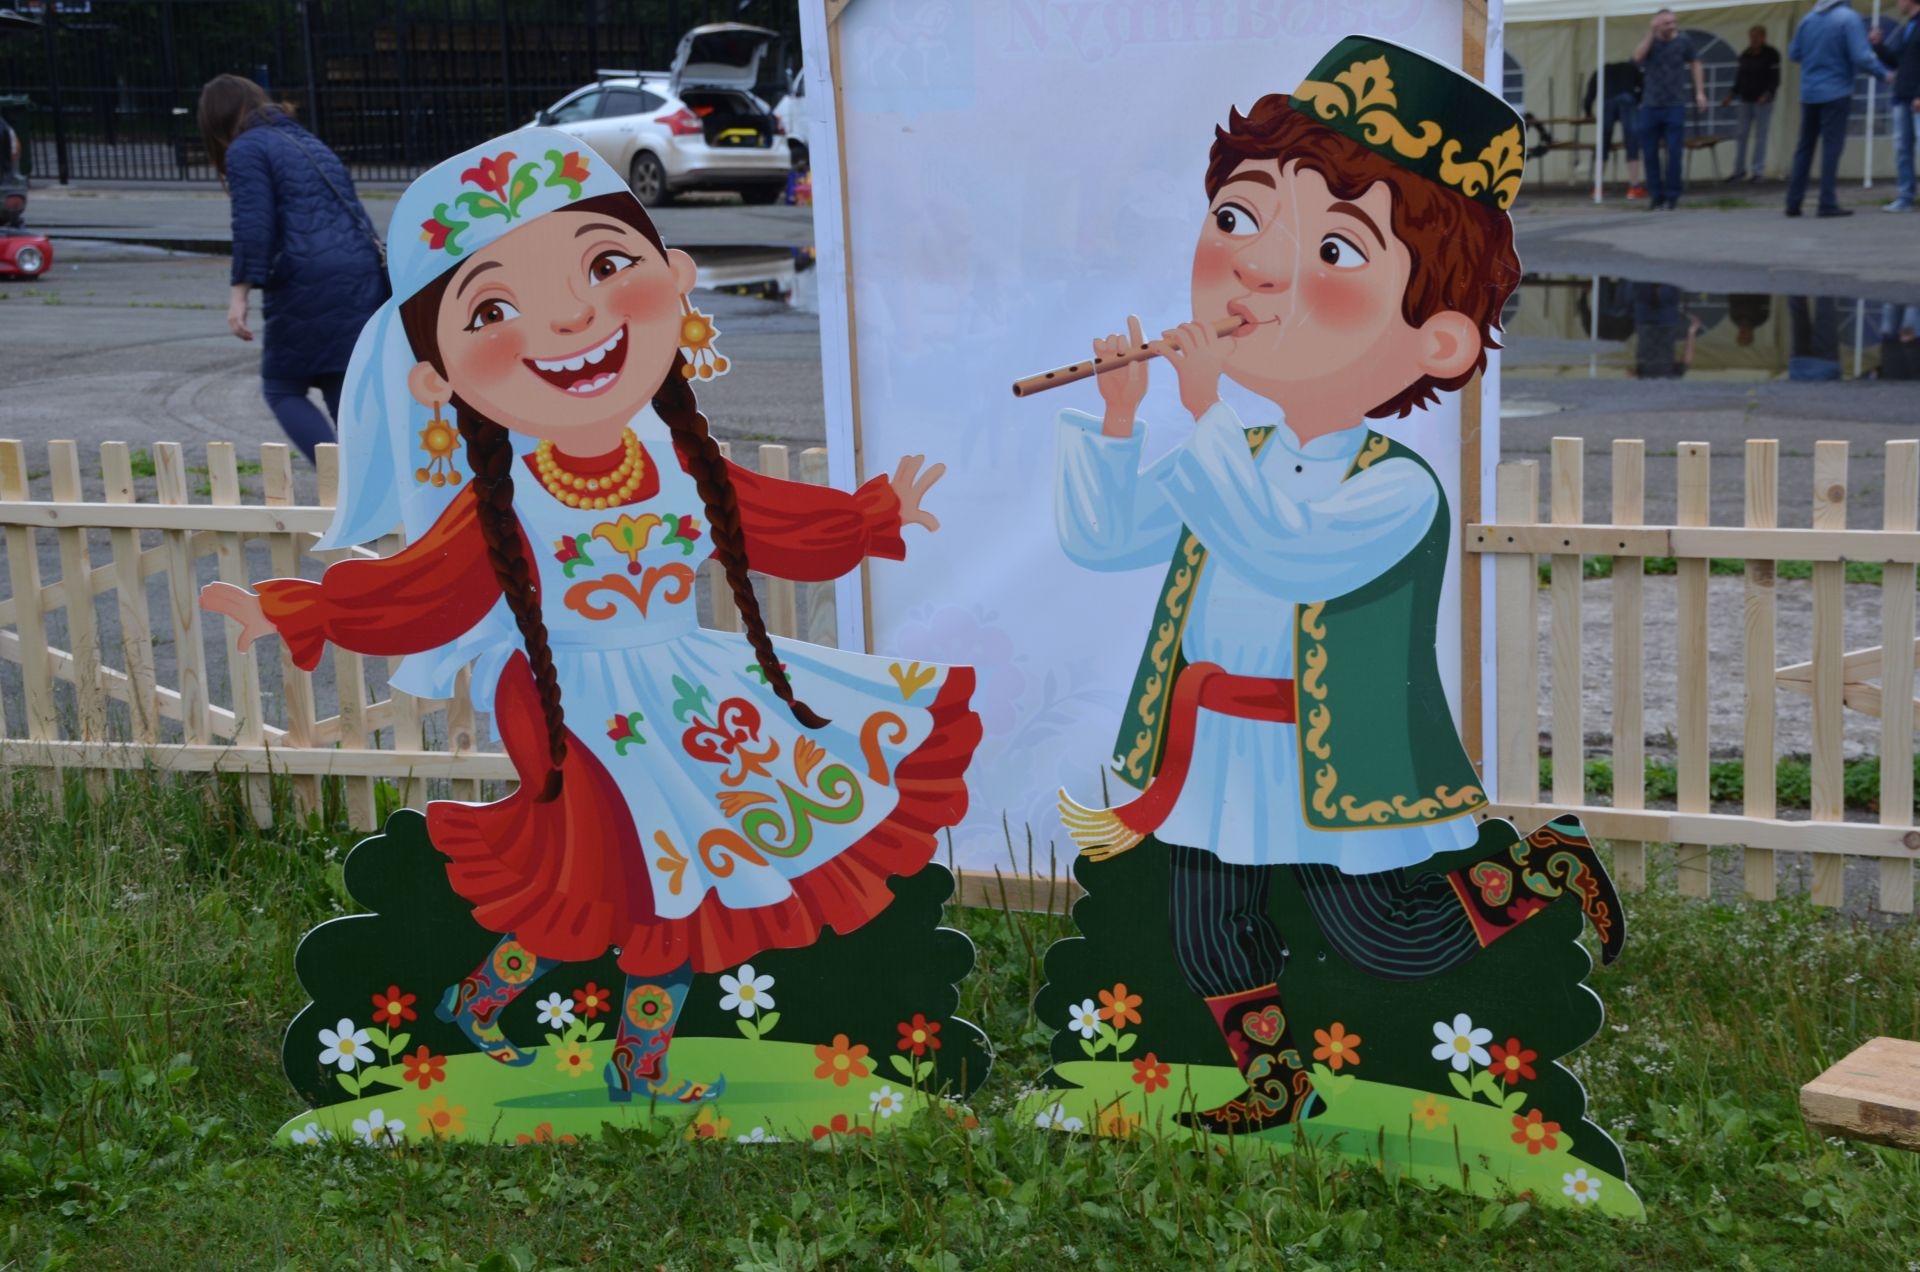 Тантамарески в саду. Тантамарески в русском народном стиле. Фотозона на Сабантуй. Сабантуй для детей. Фотозона Сабантуй для детей.